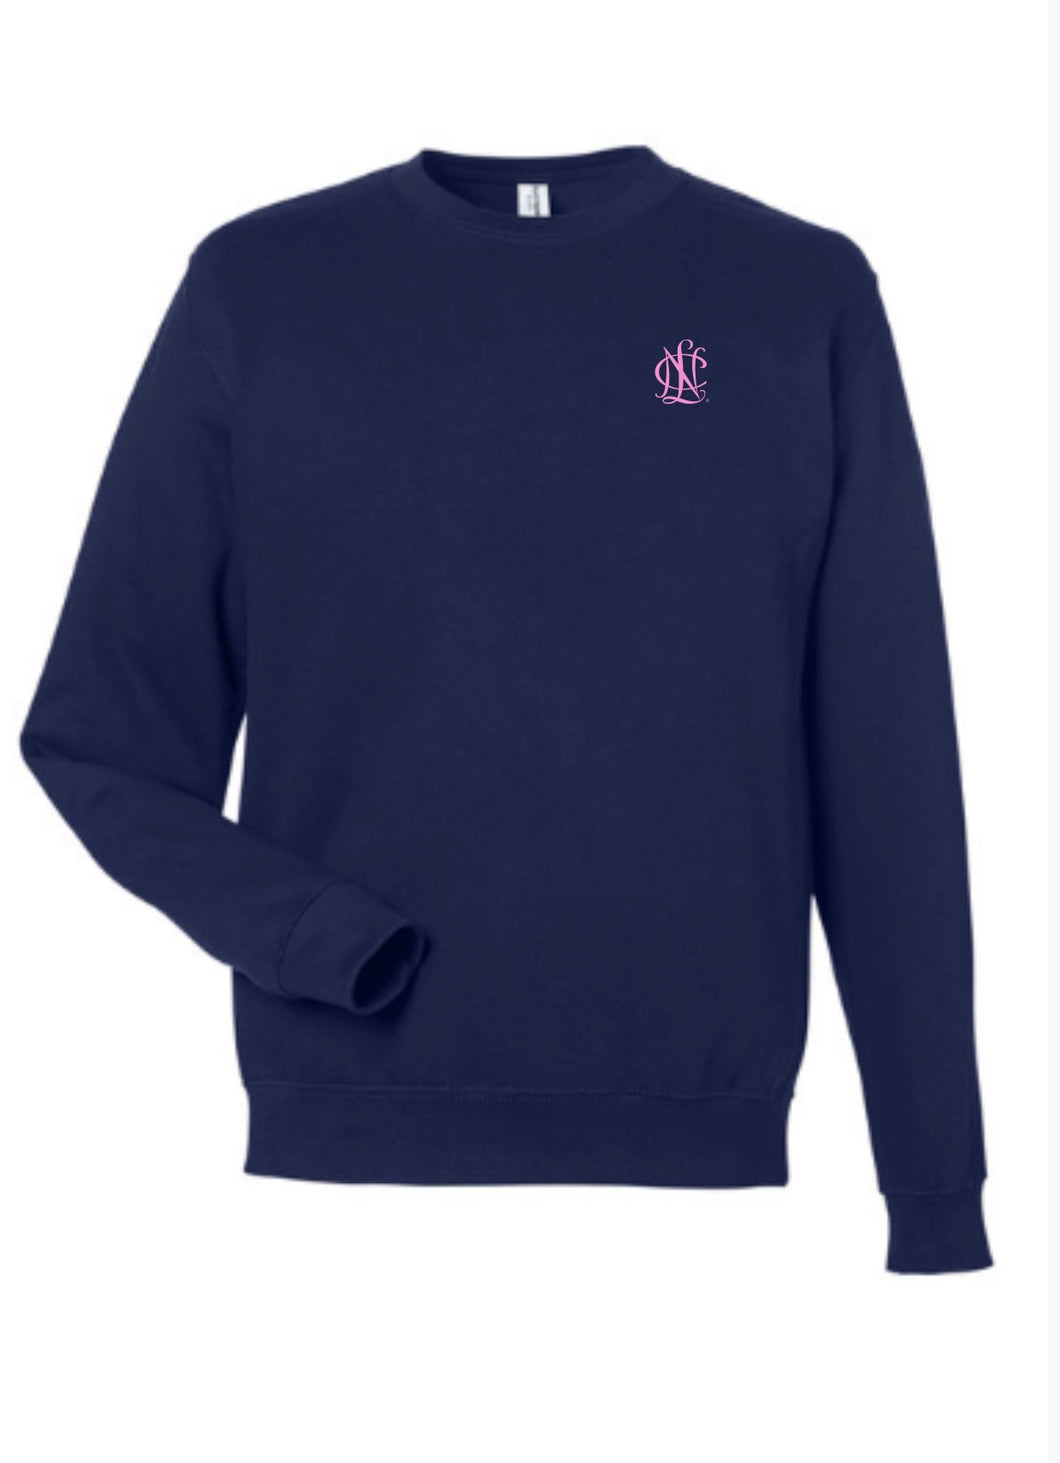 Sweatshirt - Crewneck, Navy with Pink logo